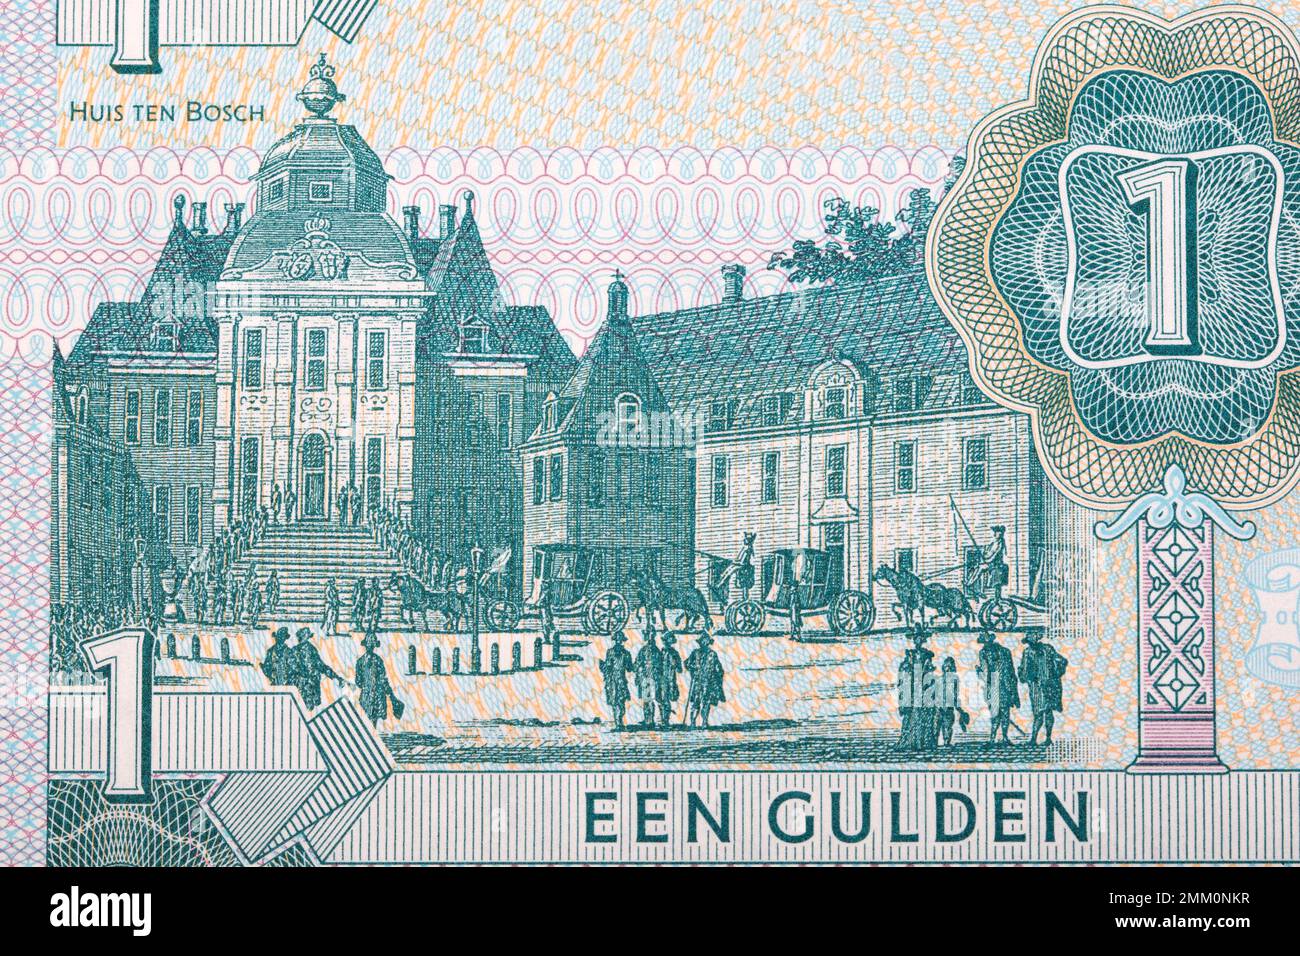 Huis Ten Bosch Palace de dinero holandés Foto de stock